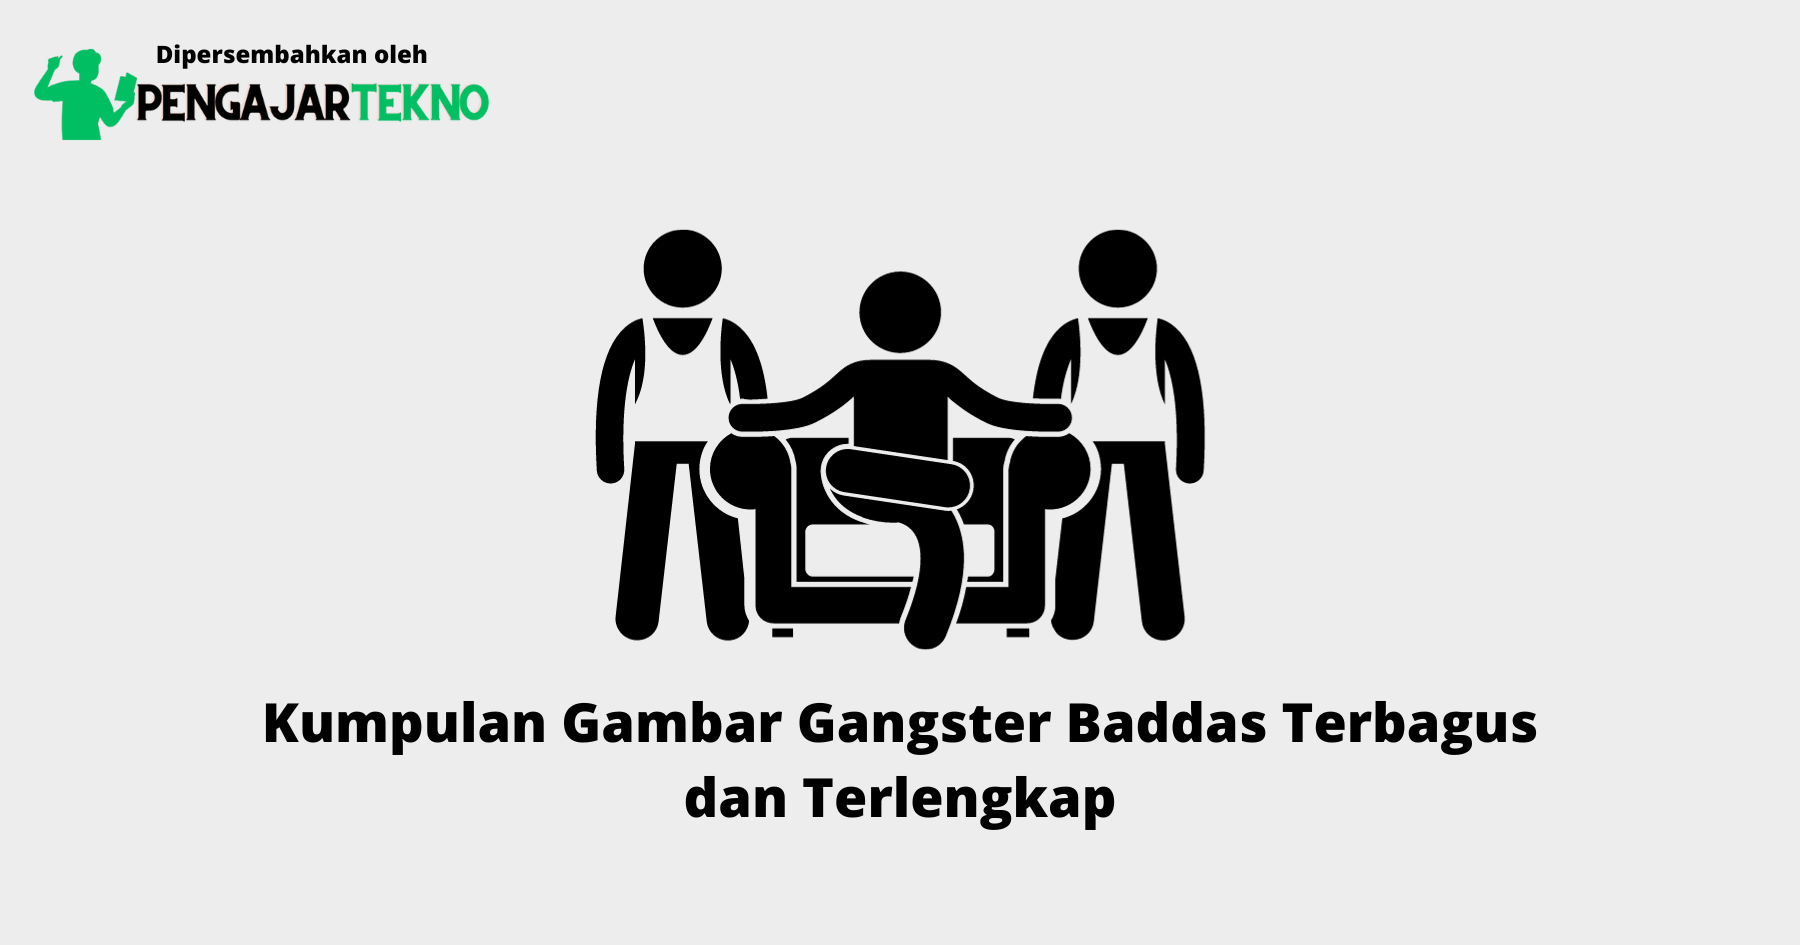 Gambar Gangster